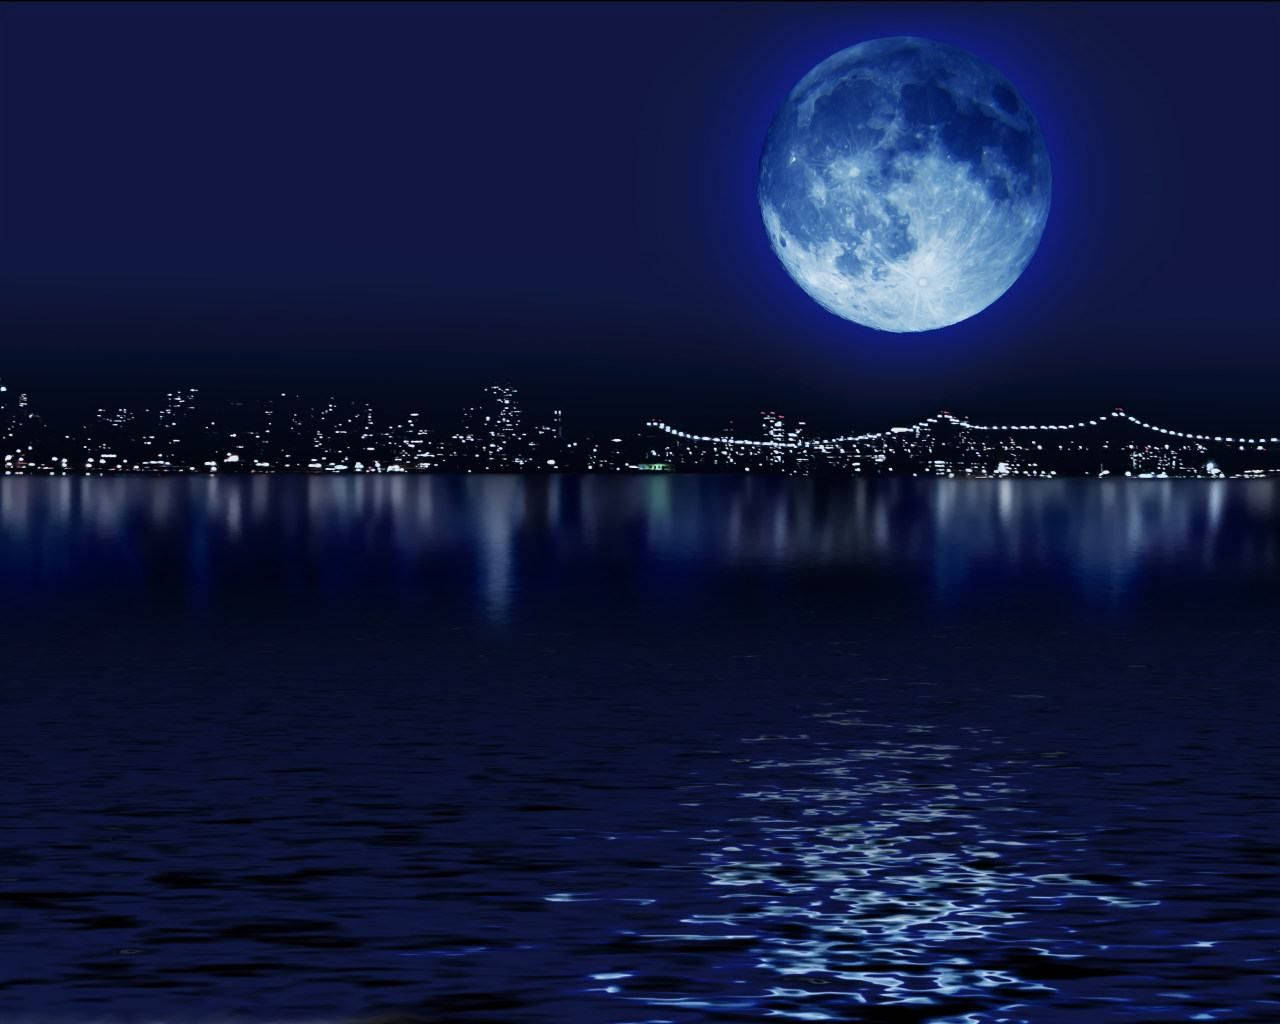 Dark Night Full Moon Over City